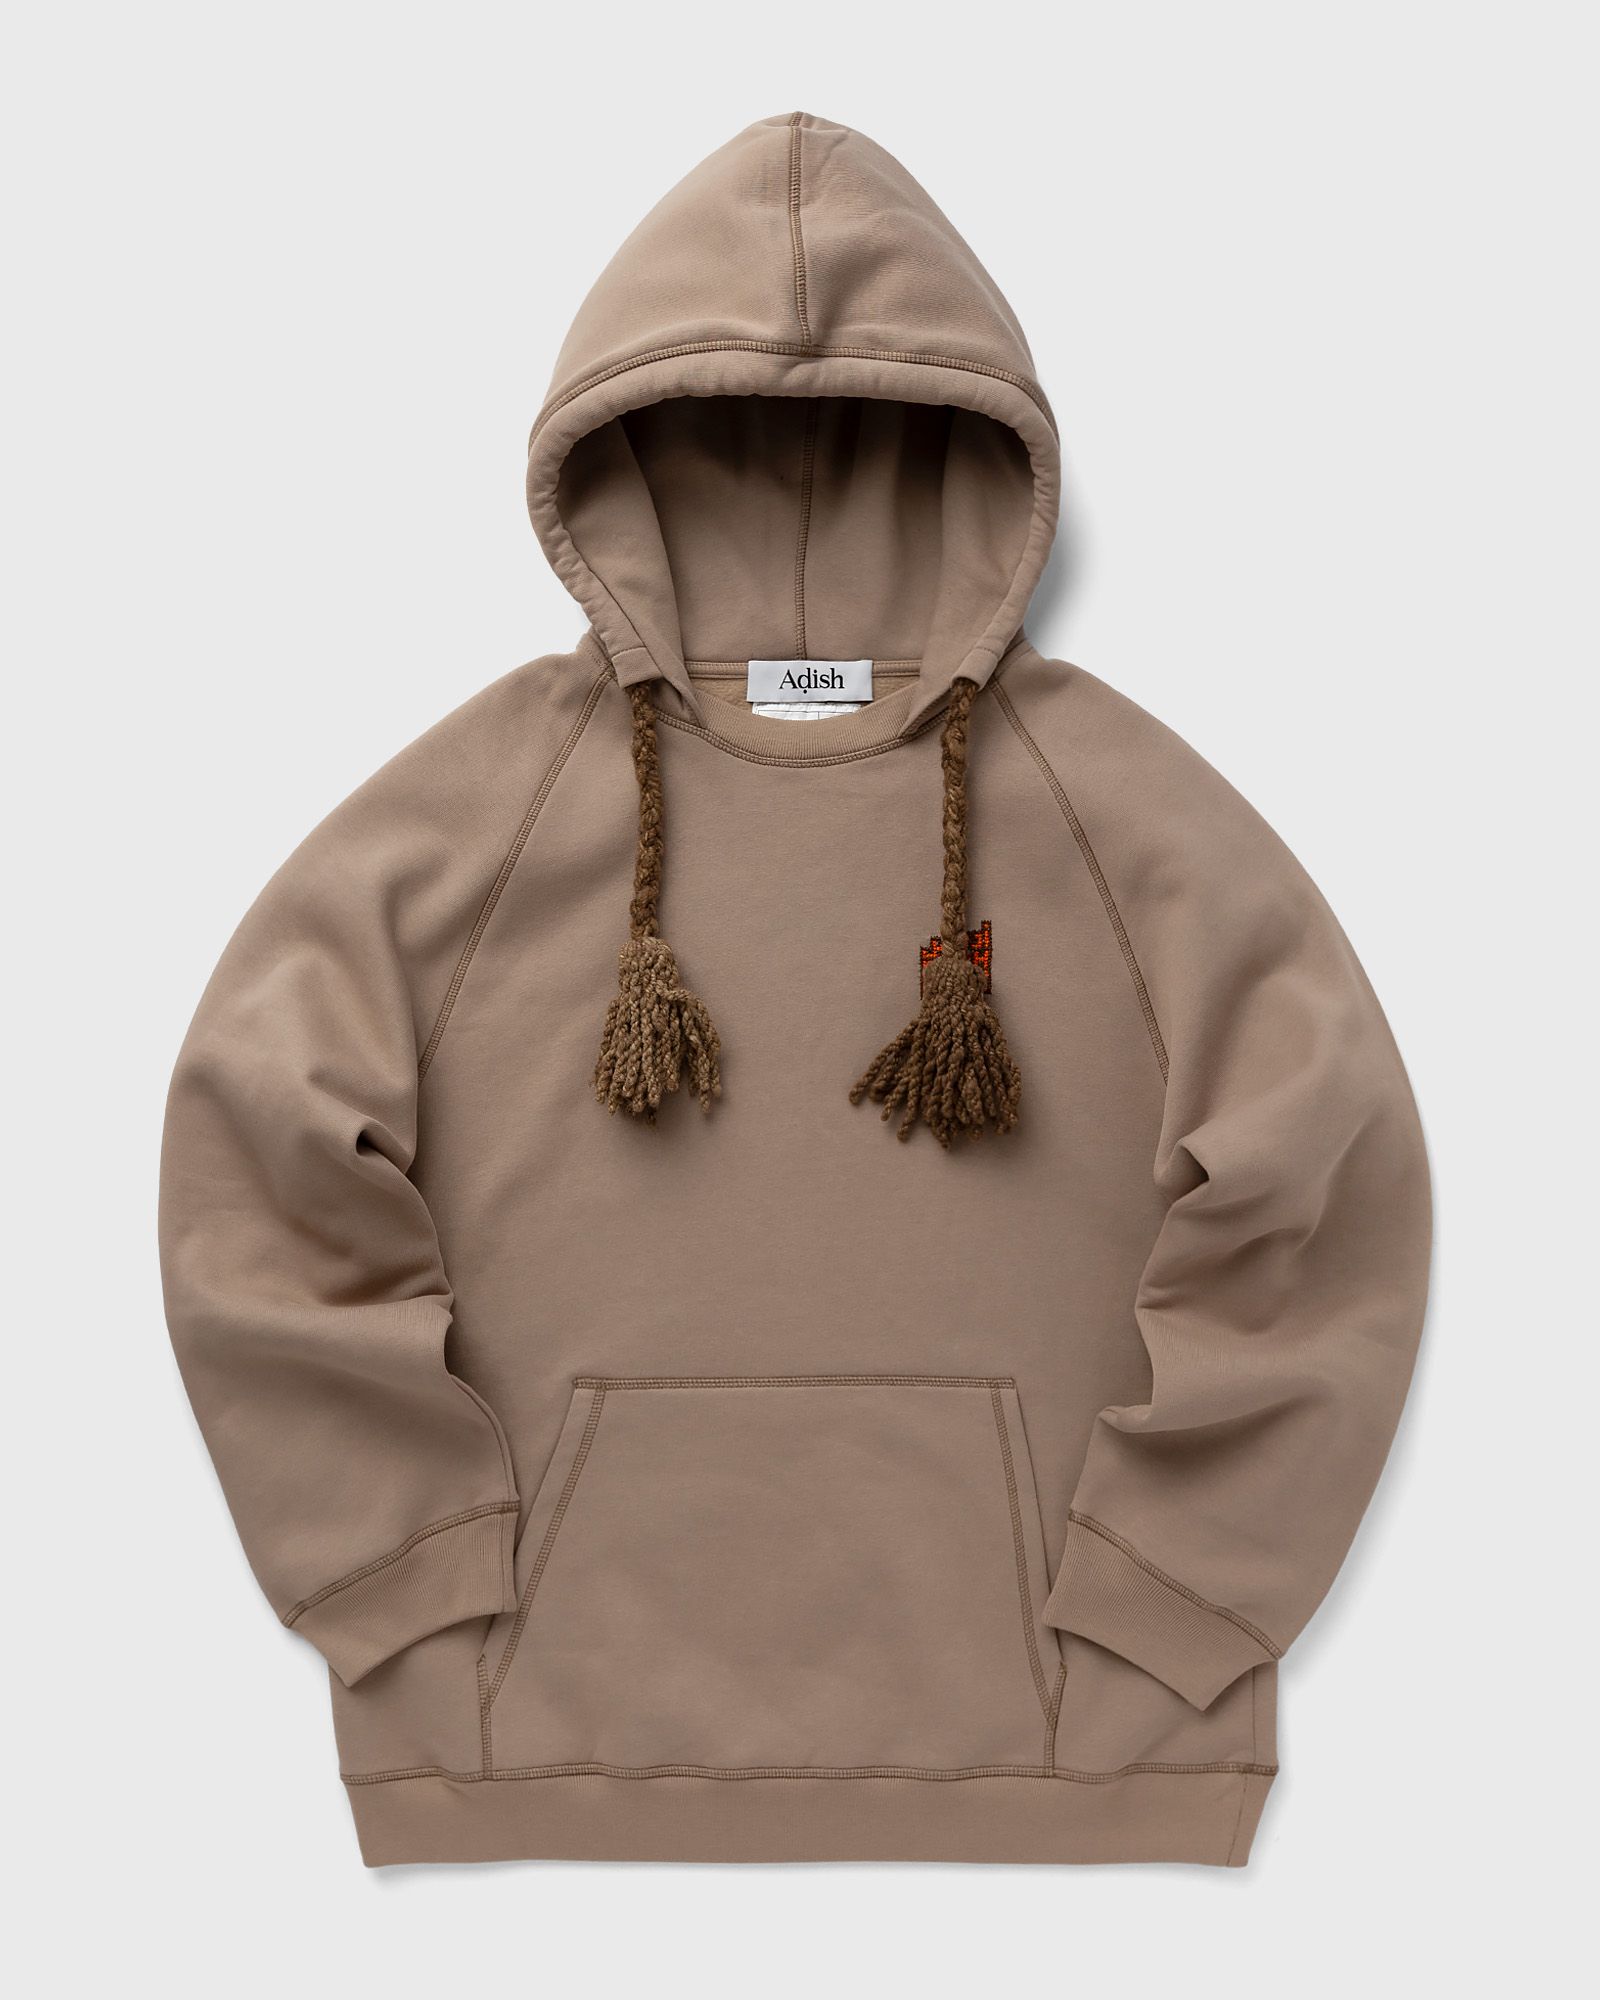 ADISH - tatreez logo contrast stitched lakiya hoodie men hoodies brown in größe:xxl